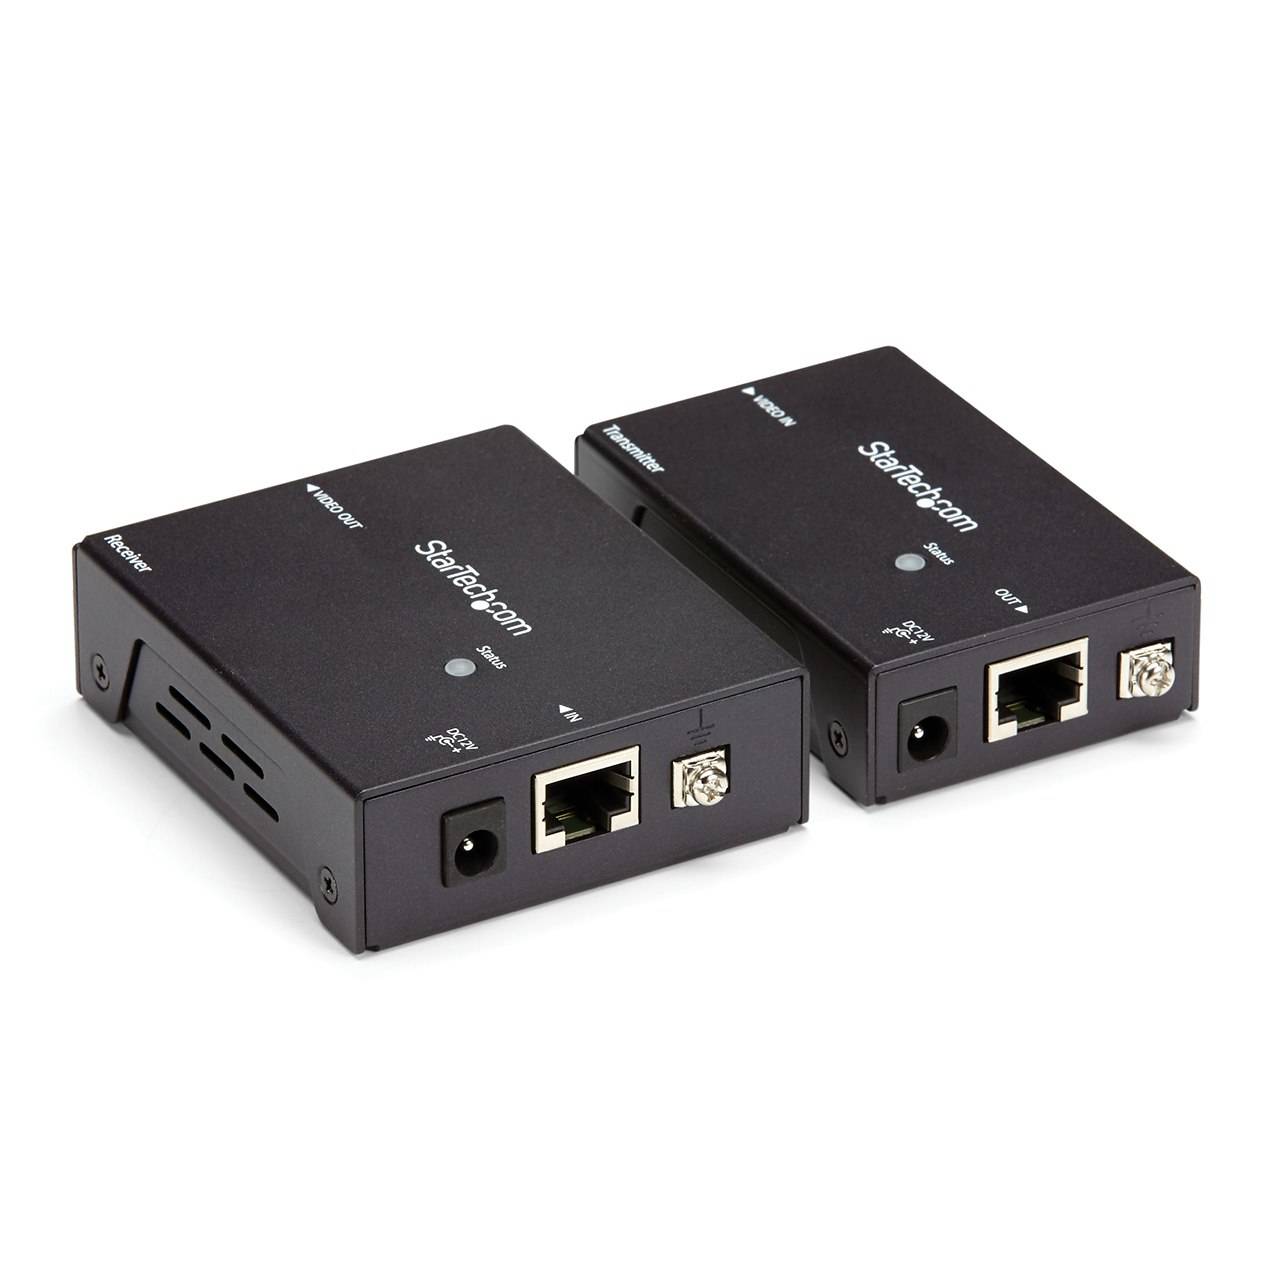 Rca Informatique - Image du produit : HDMI OVER SINGLE CAT5 EXTENDER WITH POWER OVER CABLE - 70M